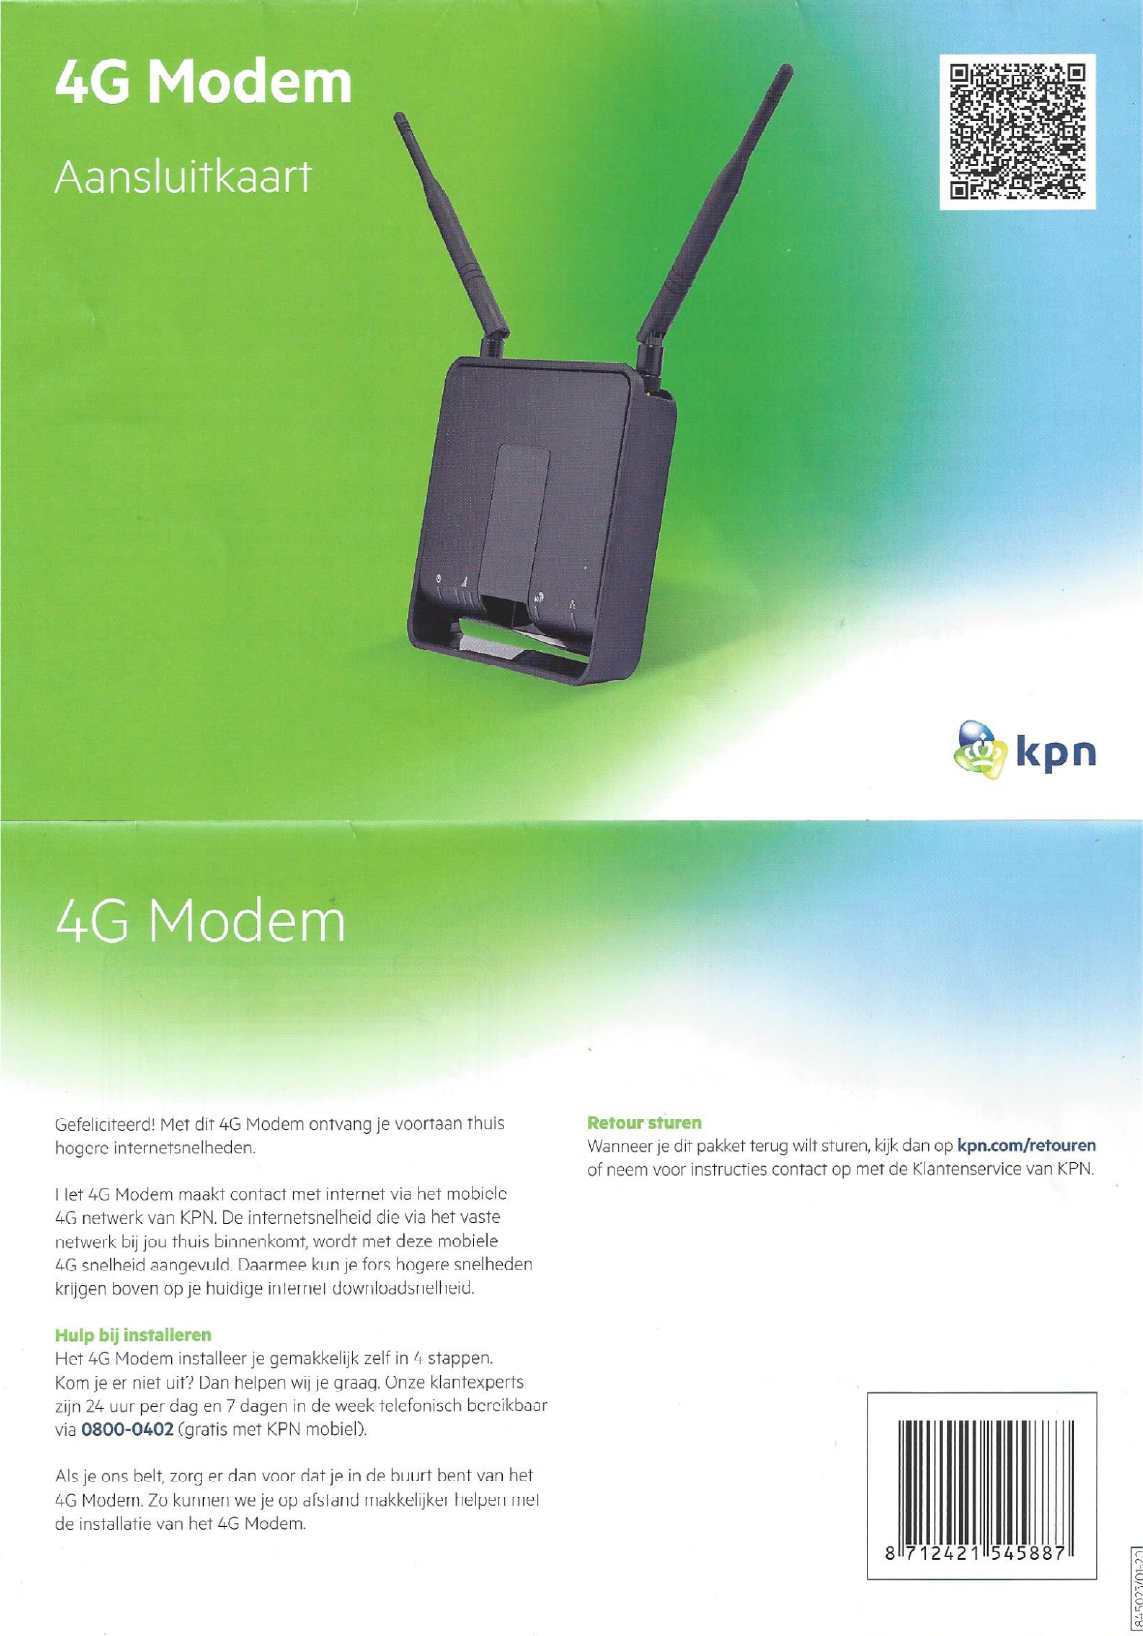 Ineenstorting helpen Integreren Handleiding Sagemcom FaST 4360 Air KPN 4G Modem (pagina 1 van 4)  (Nederlands)